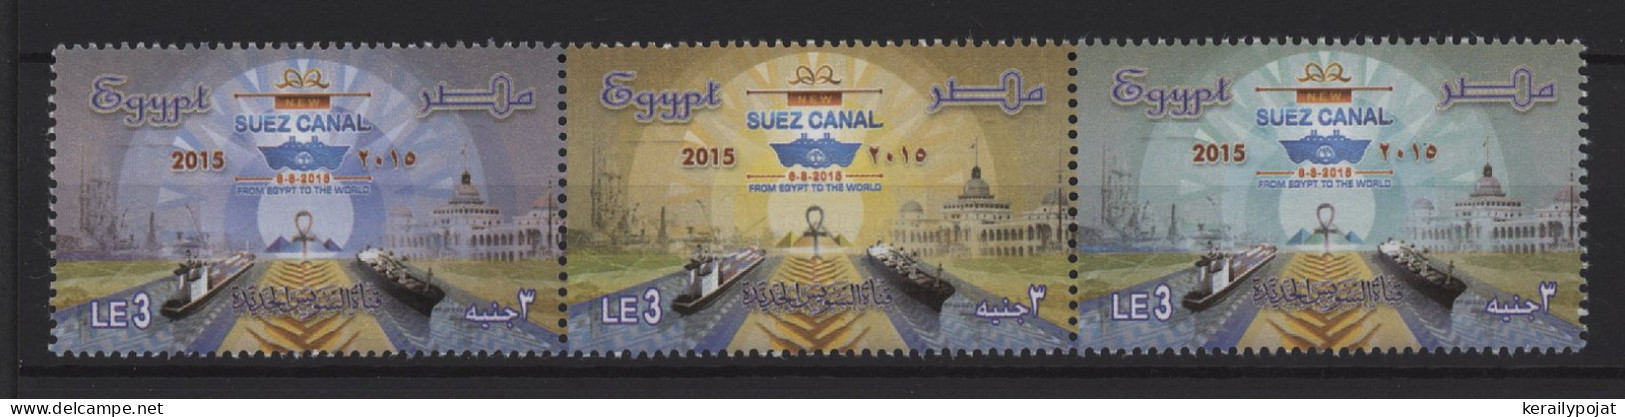 Egypt - 2015 New Suez Canal Strip MNH__(TH-26046) - Nuevos